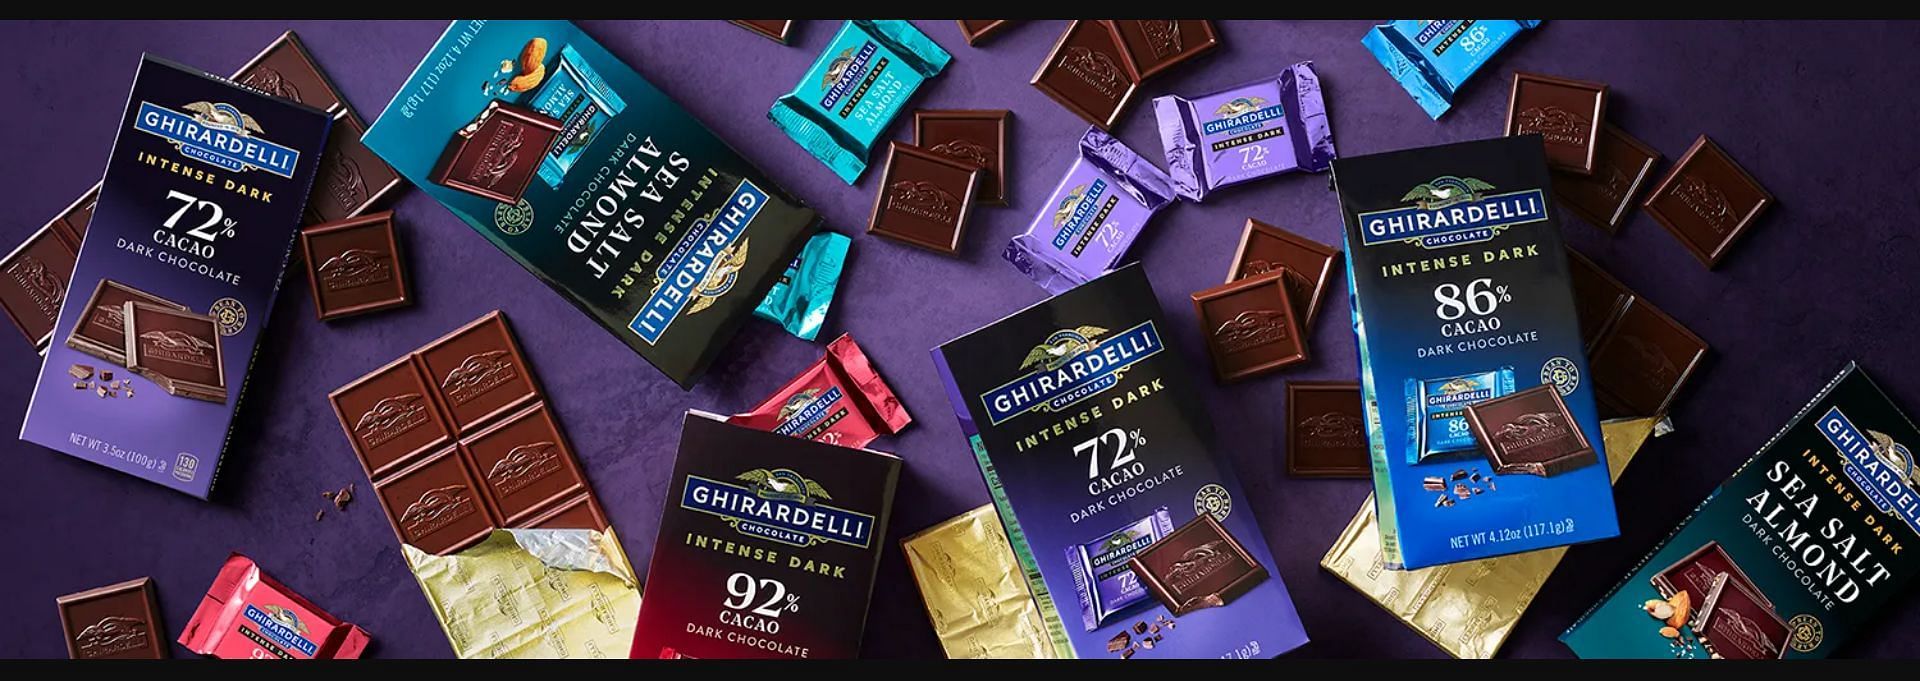 Ghirardelli 72% Cacao Dark Chocolate Squares (Image source via: www.ghirardelli.com)